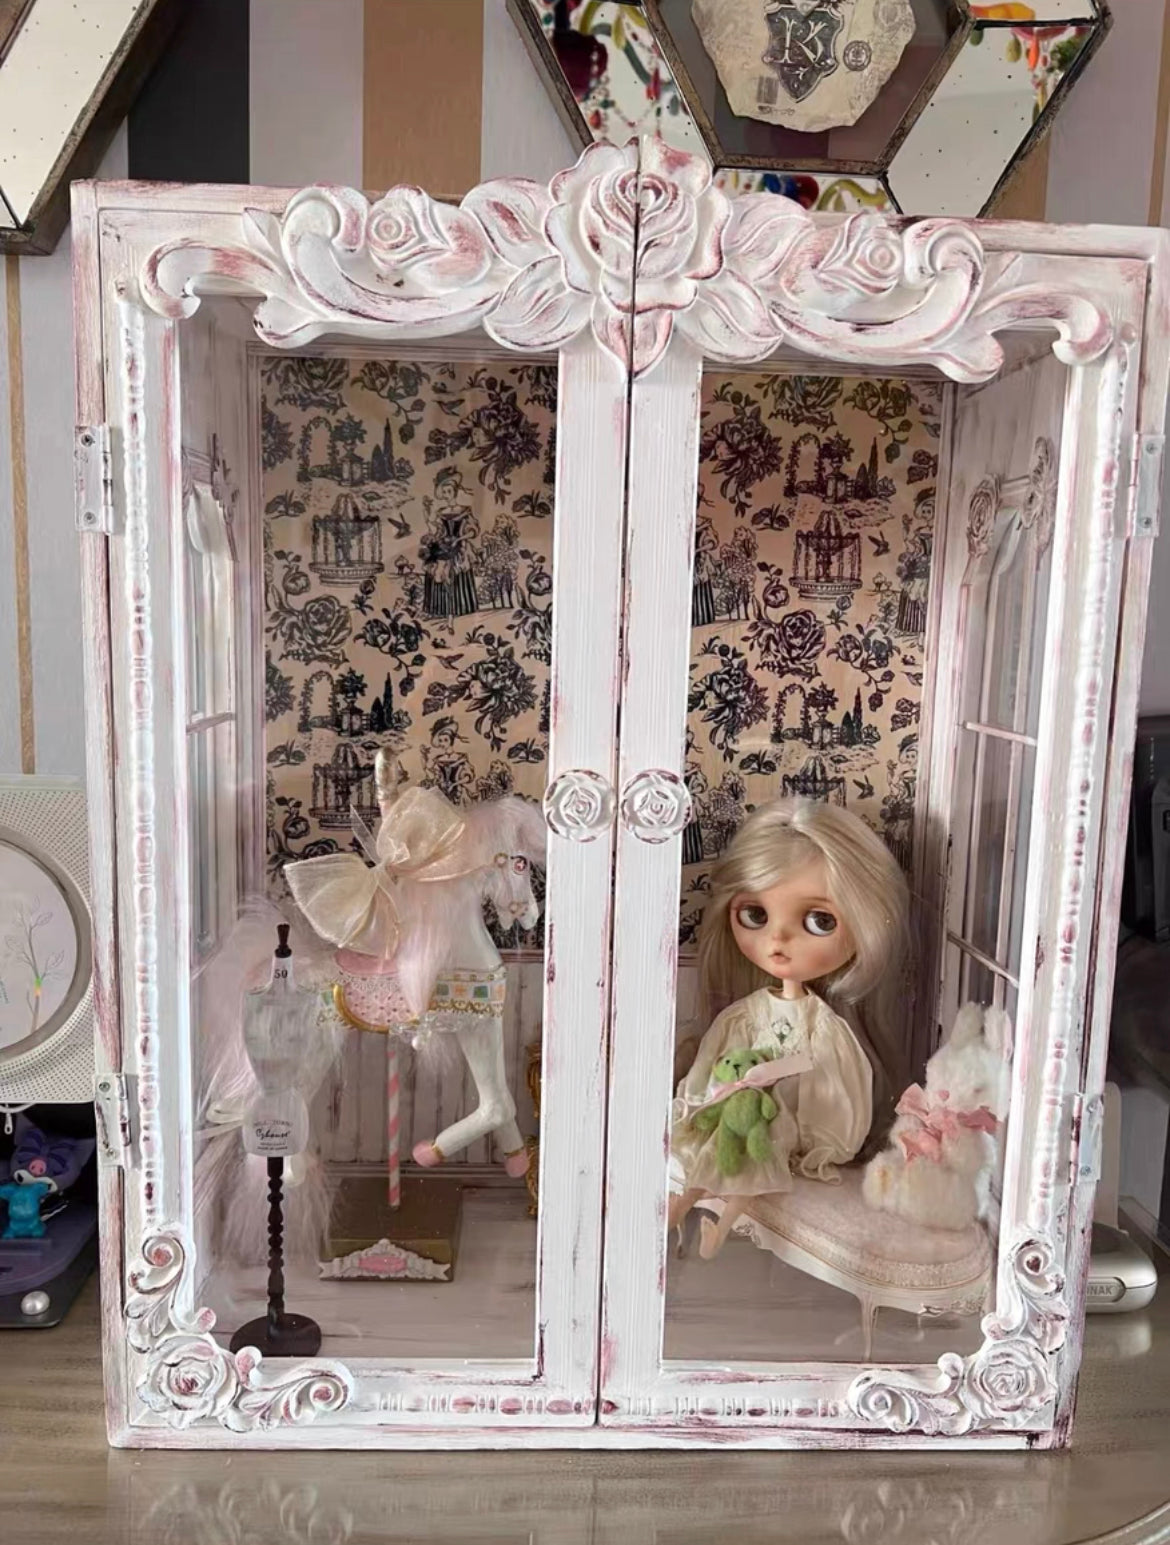 1/6 Scale Doll Wardrobe 15 Hangers, Miniature Furniture for Dollhouse, Doll  Diorama, Blythe, Bjd Doll Closet 